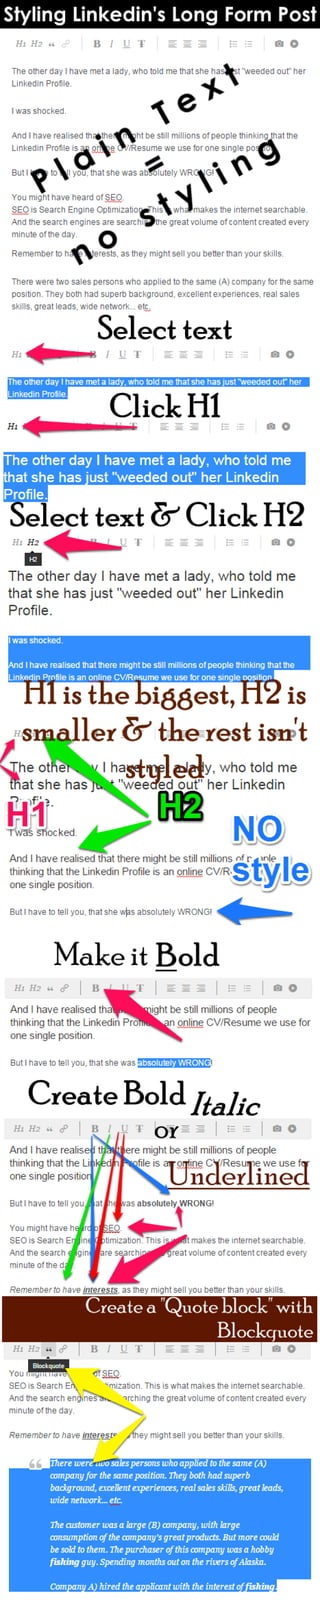 Linkedin Long Form Post Styling Infographic by DrLinkedin.com